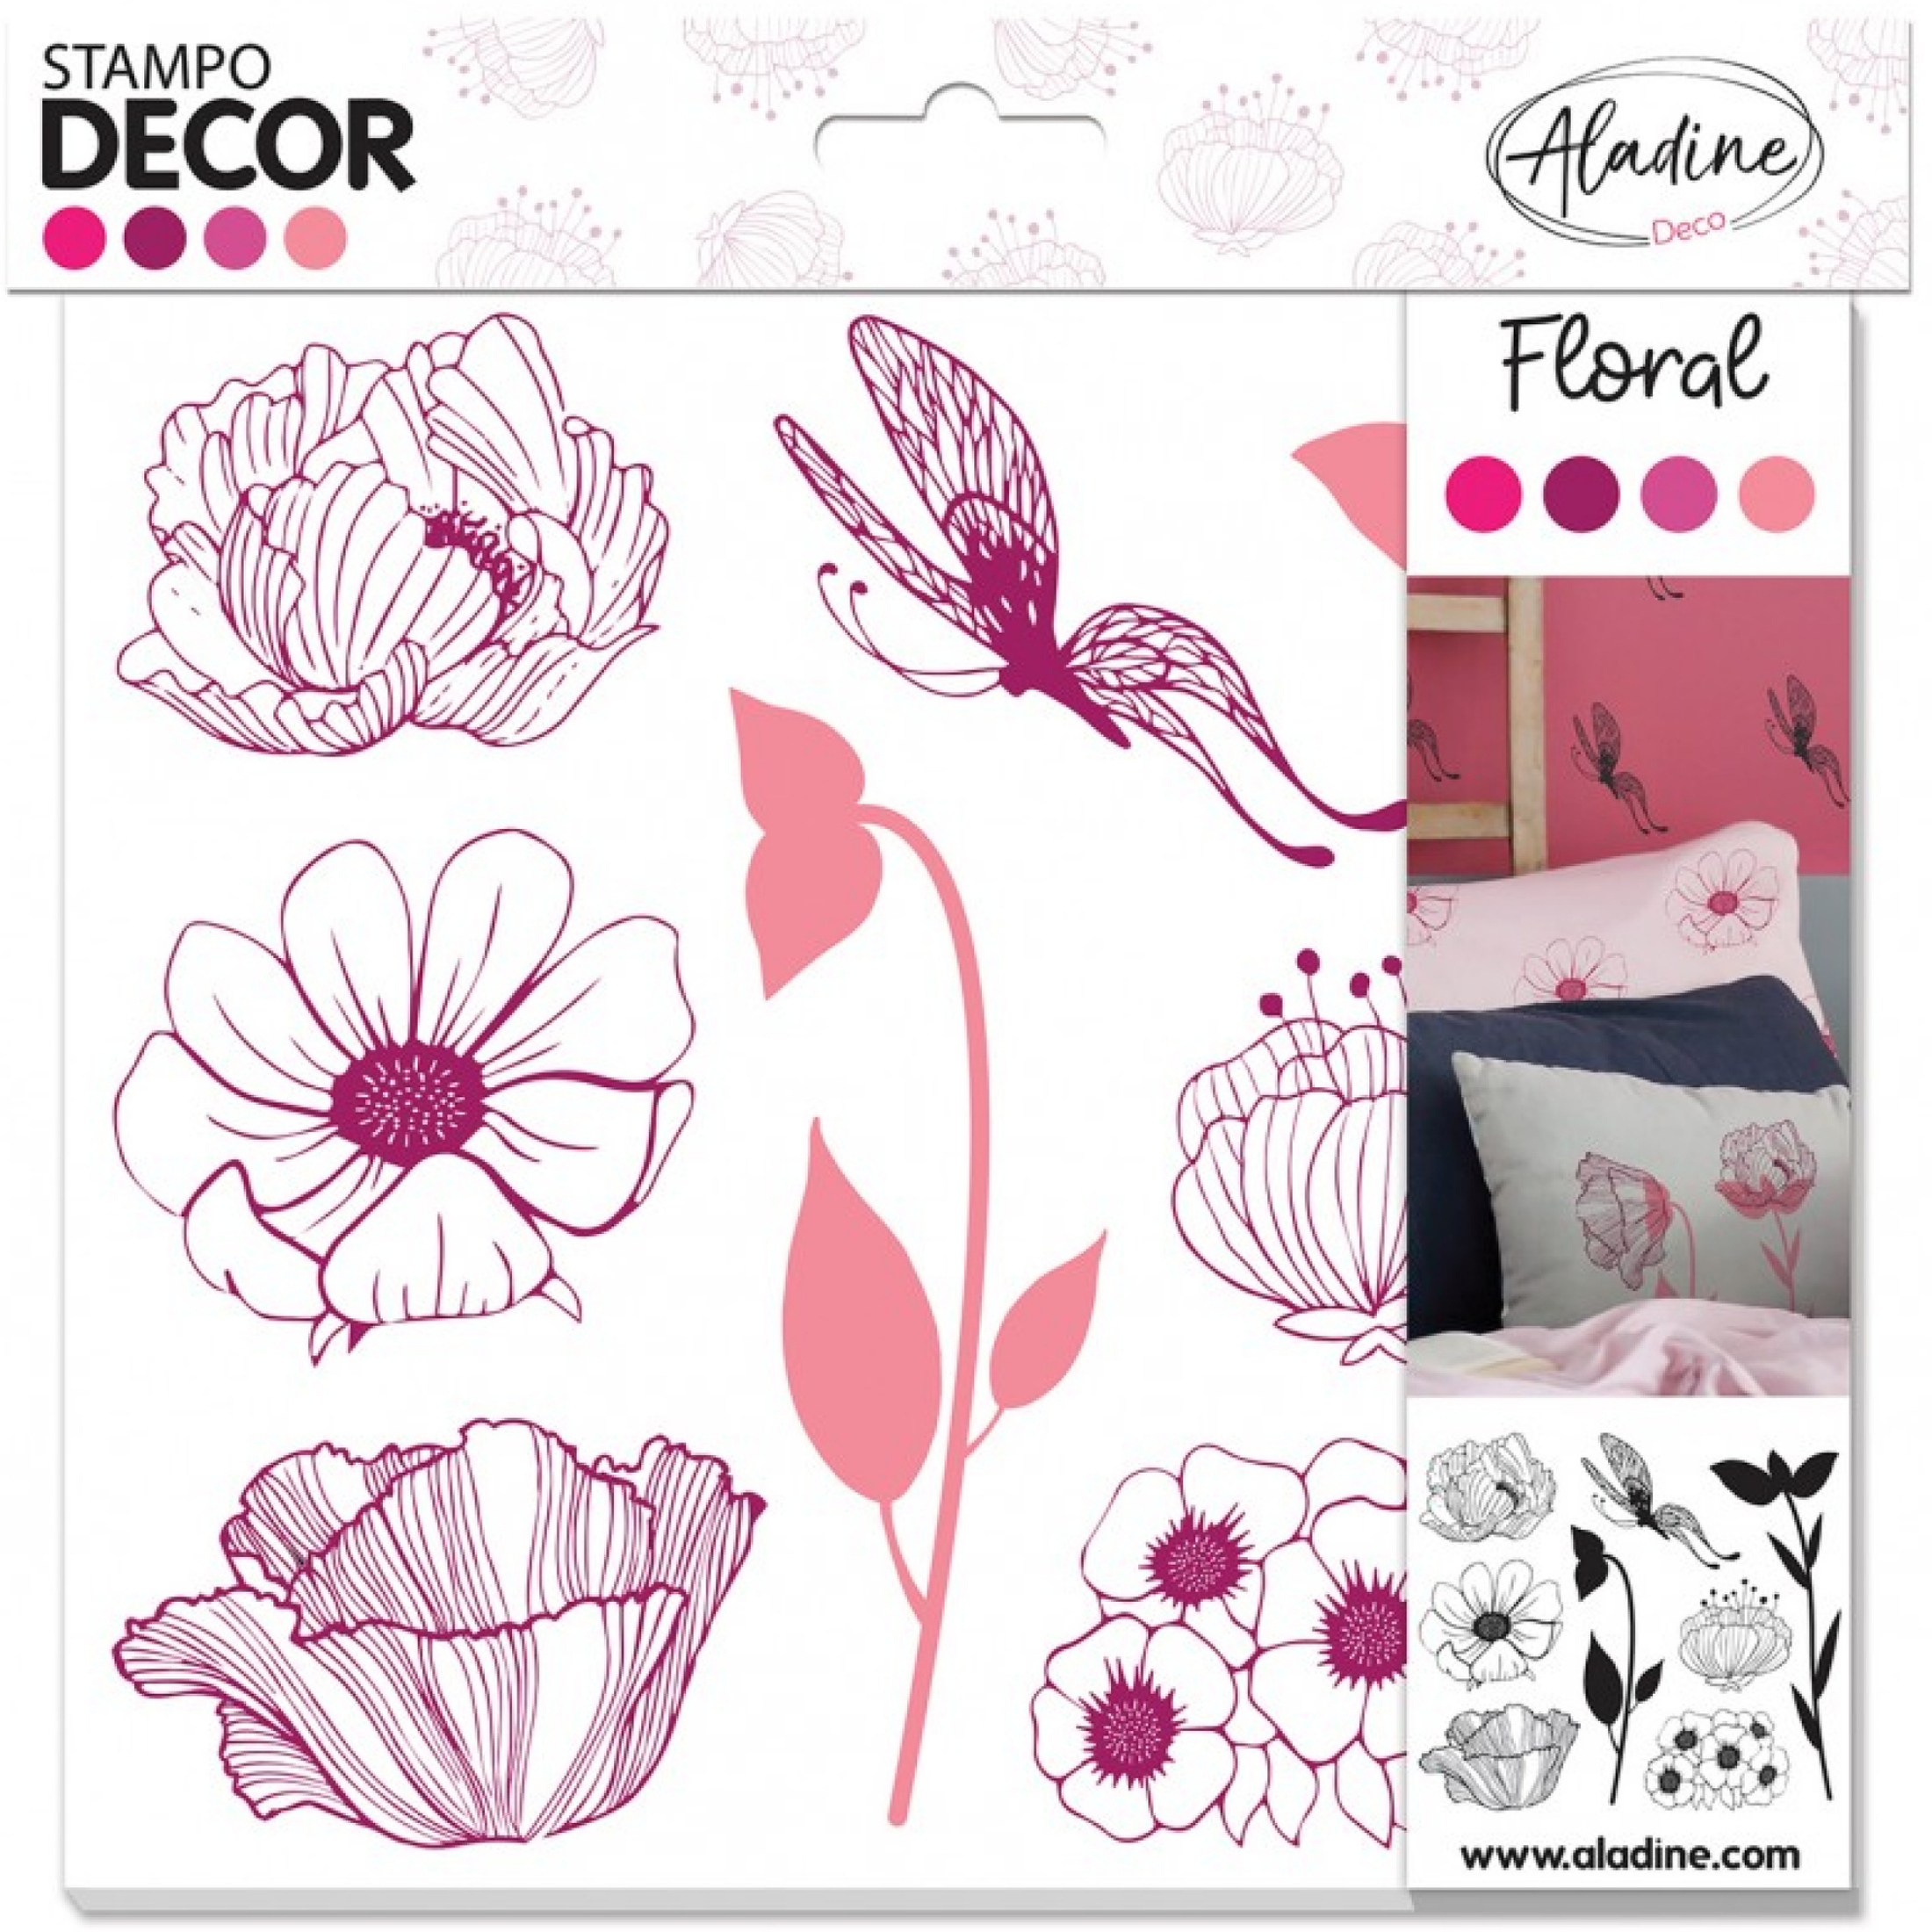 Carimbo Decor Floral 05284 8 Motivos aladine